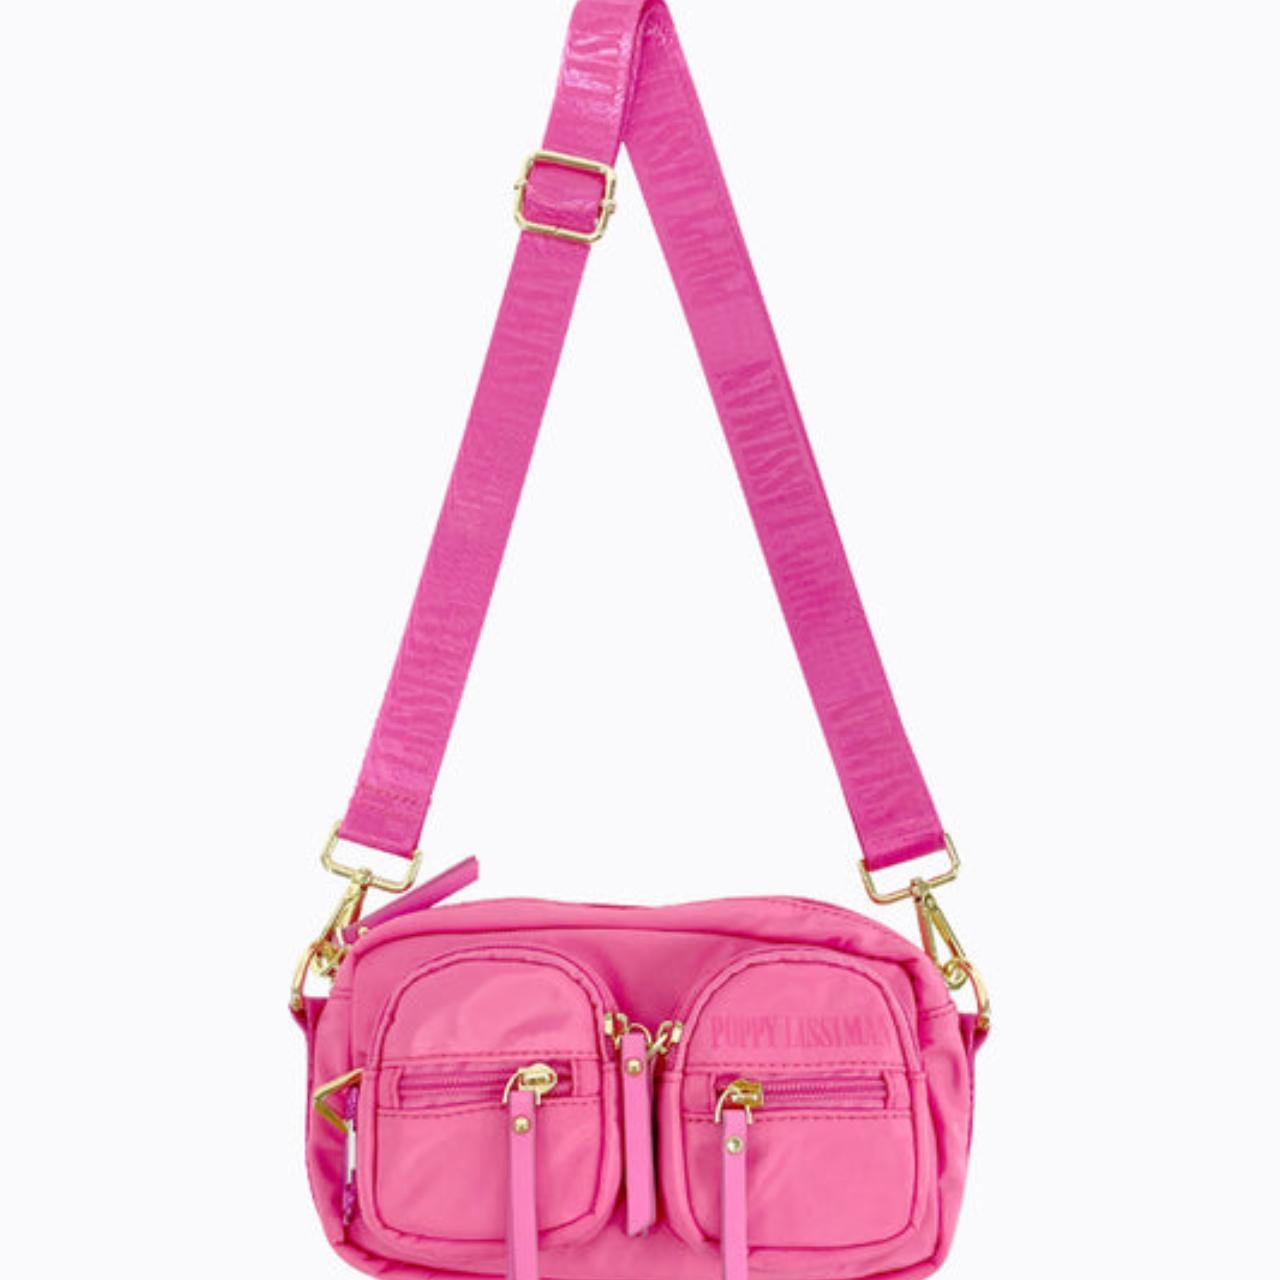 Hot pink bobby bag poppy lissiman. Price is... - Depop